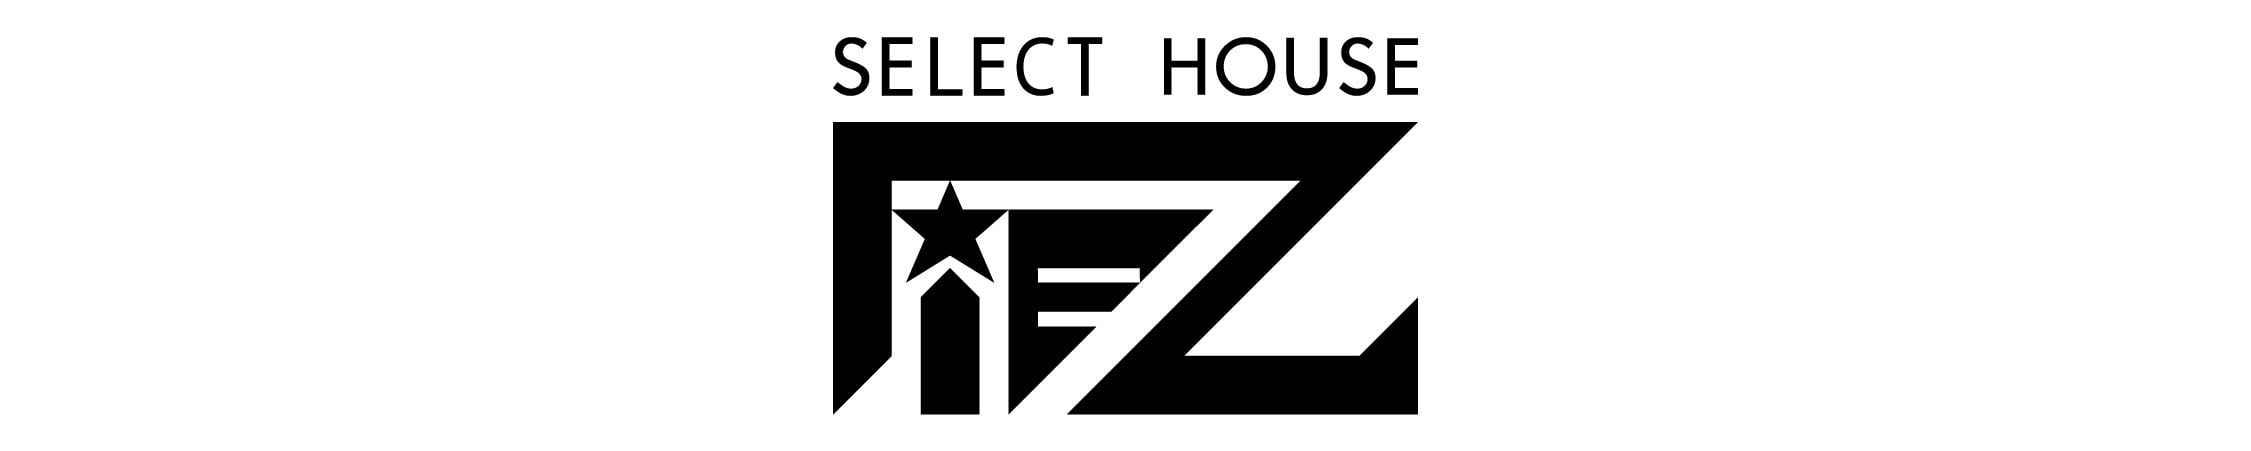 Select House TieZ